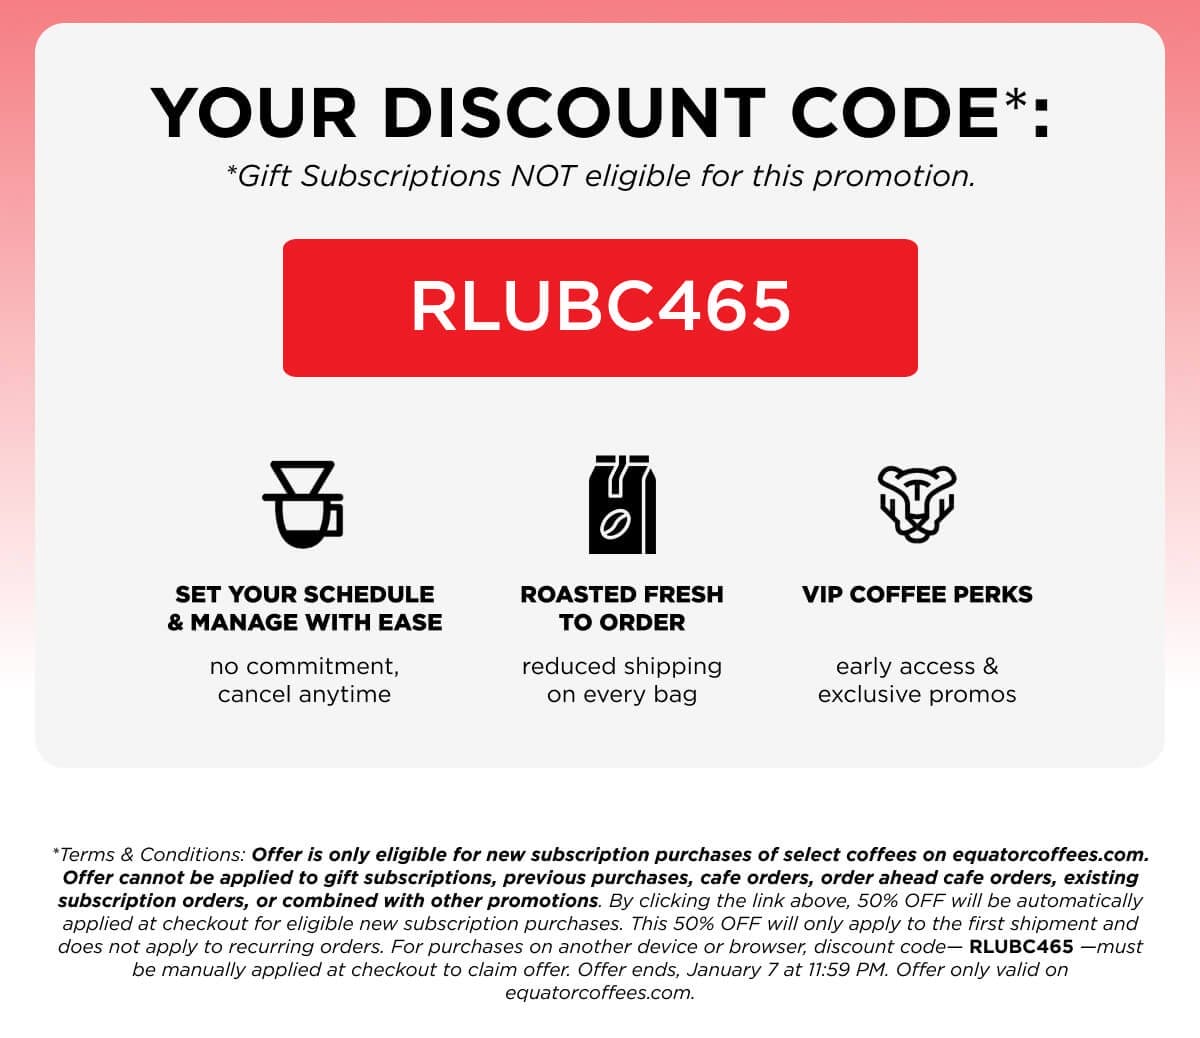 Your Discount Code: RLUBC465